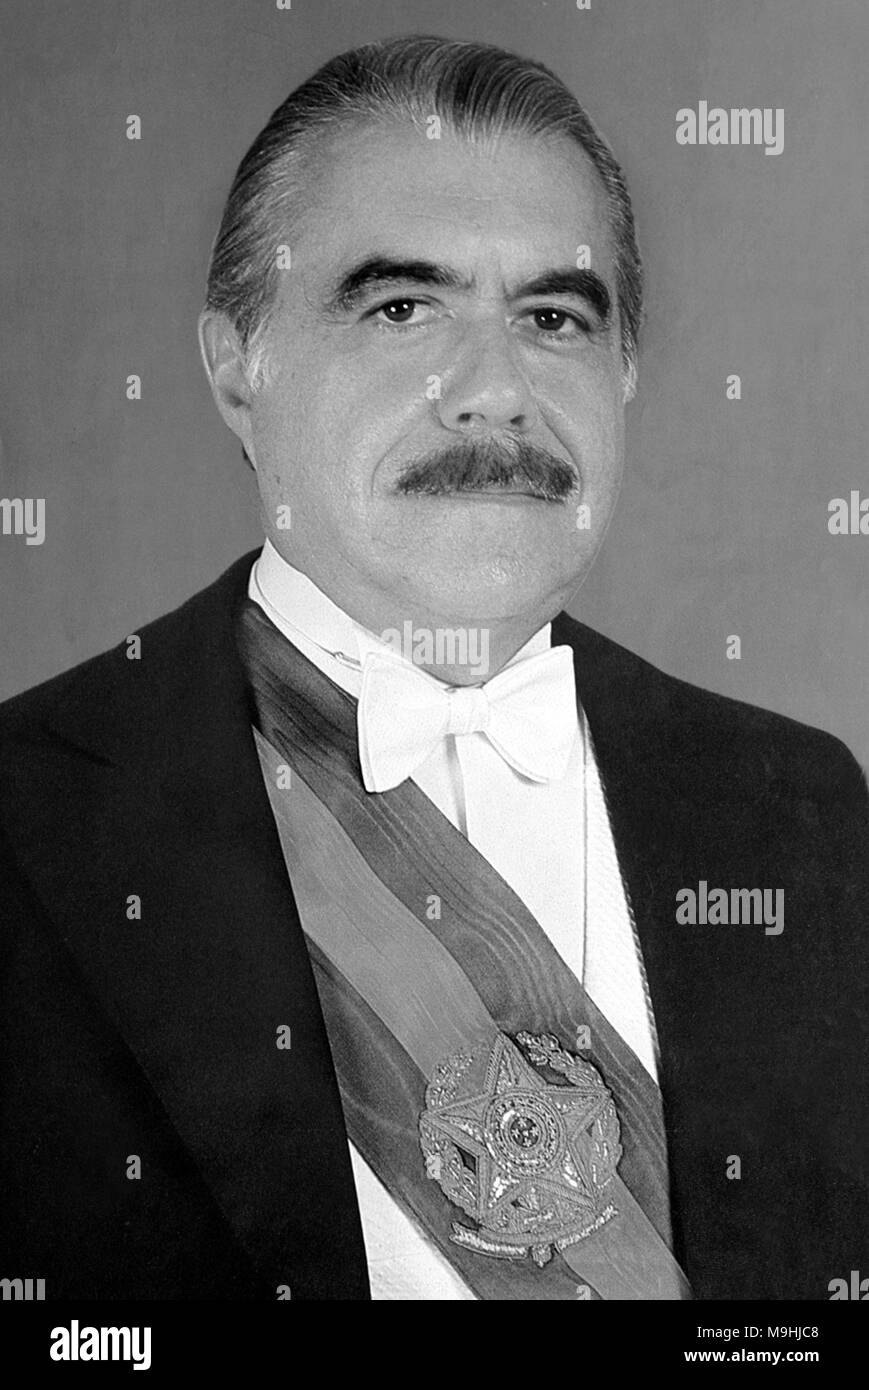 José Sarney de Araújo Costa, 31st President of Brazil from March 15, 1985 to March 15, 1990 Stock Photo